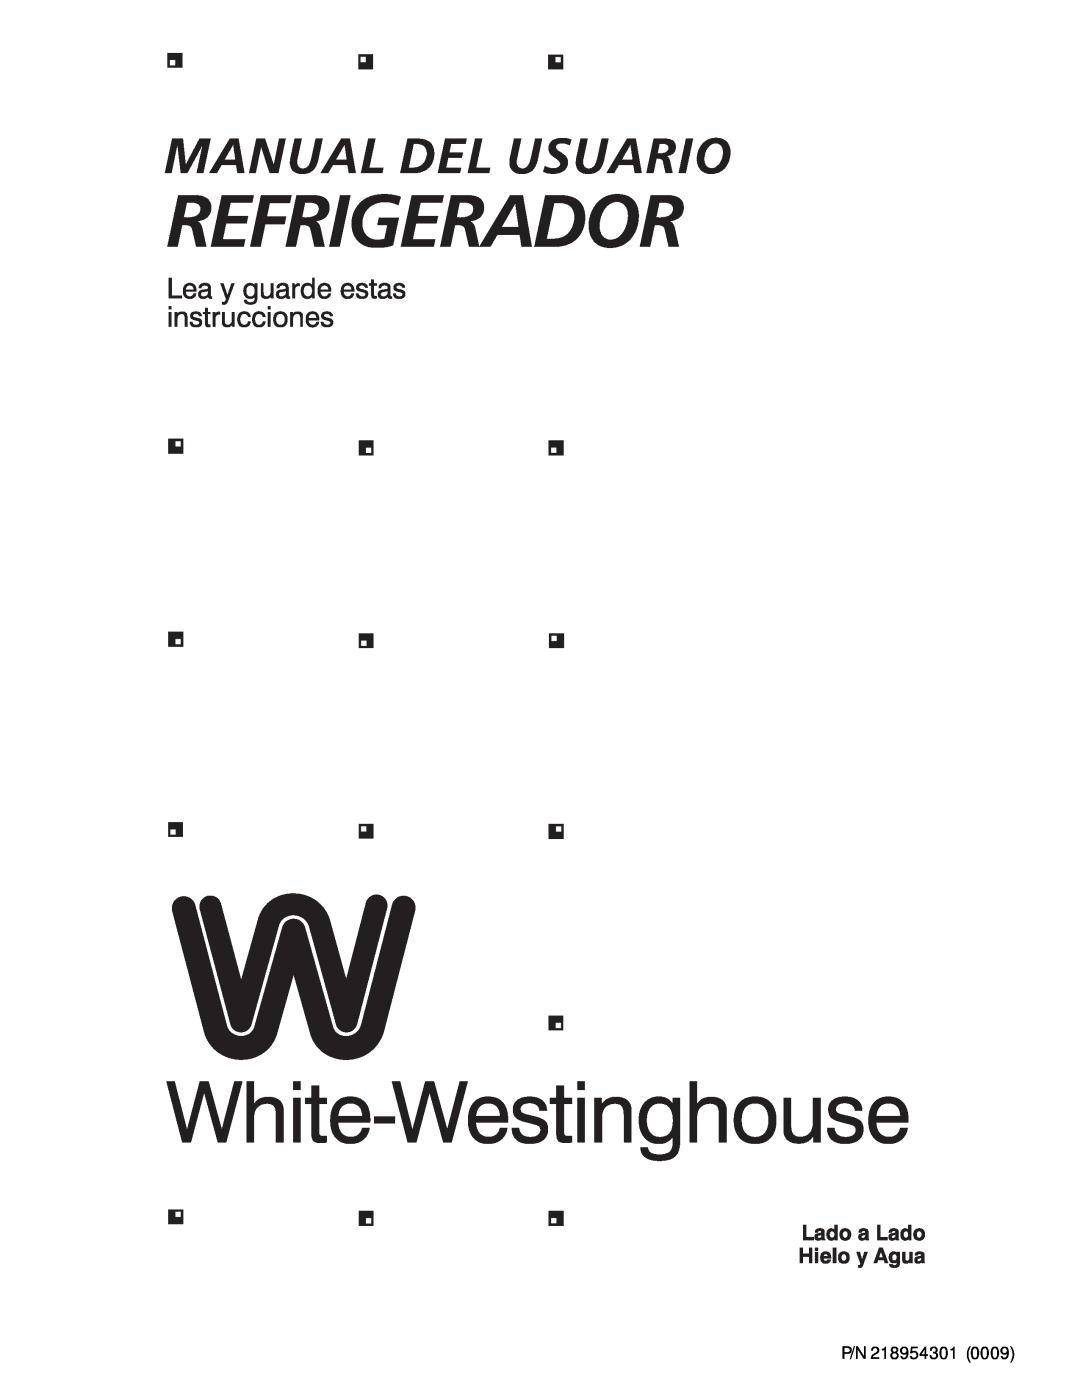 White-Westinghouse manual P/N 218954301 